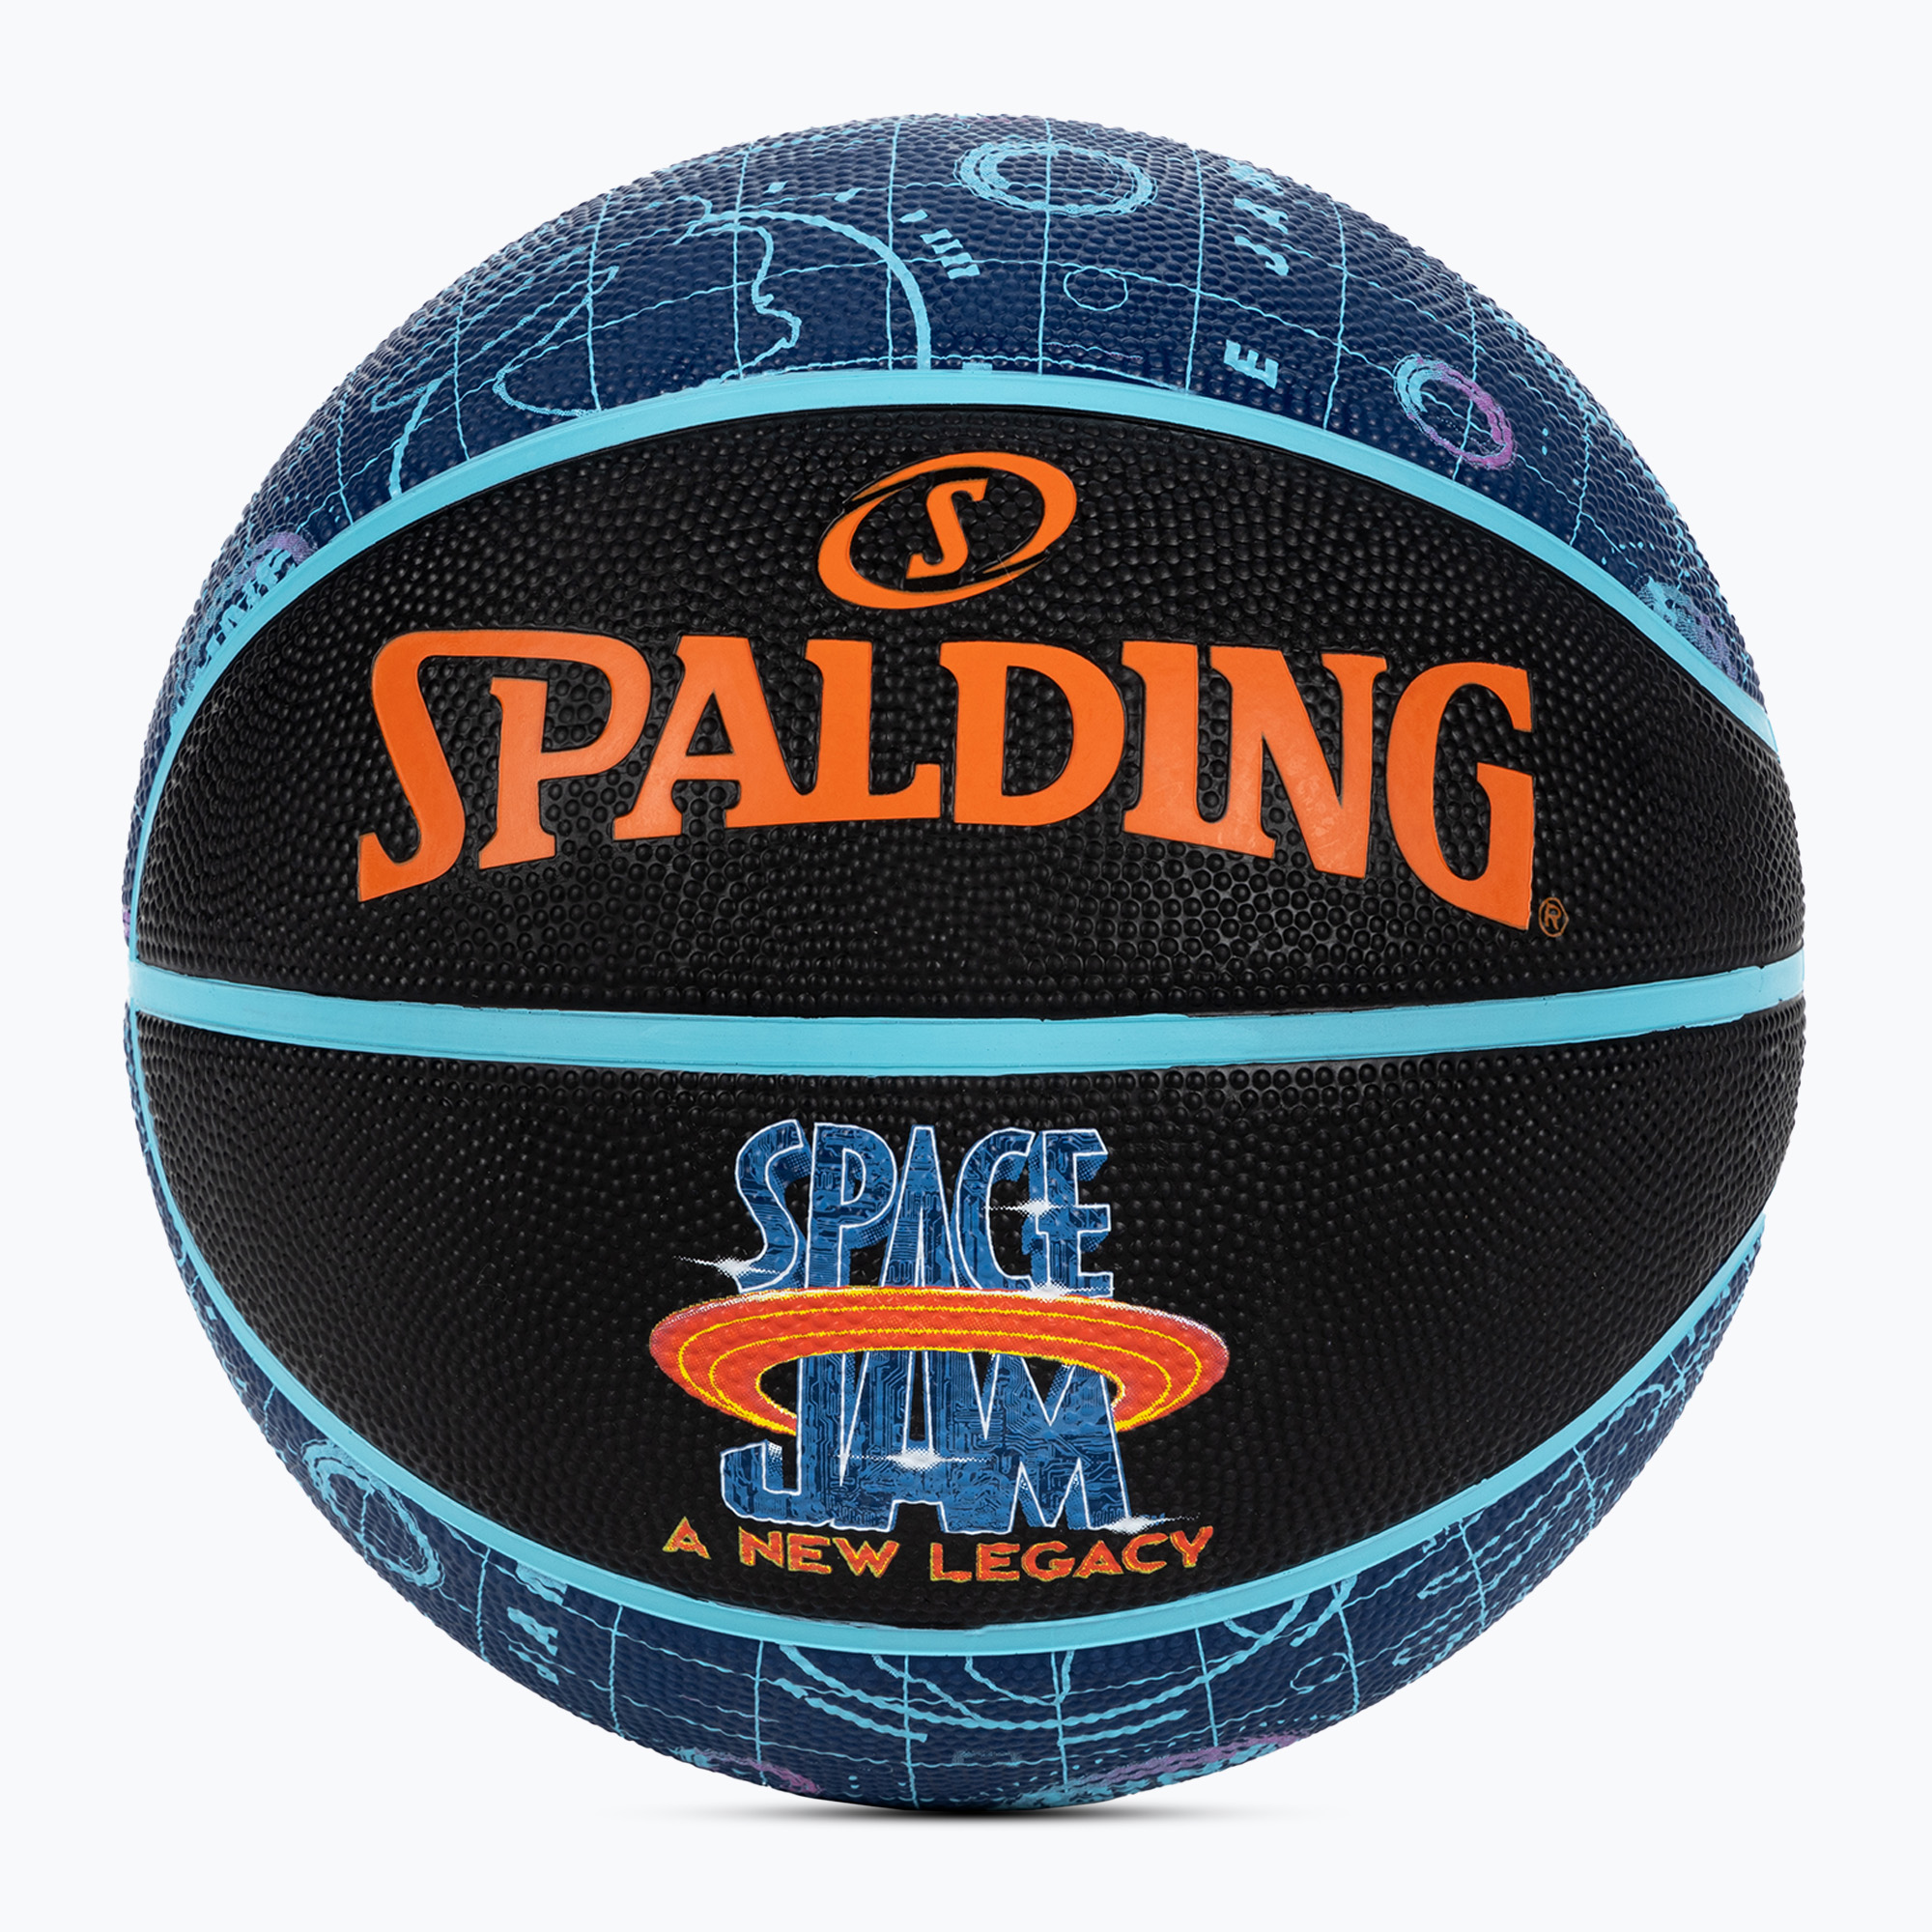 Spalding Space Jam baschet 84596Z dimensiune 5